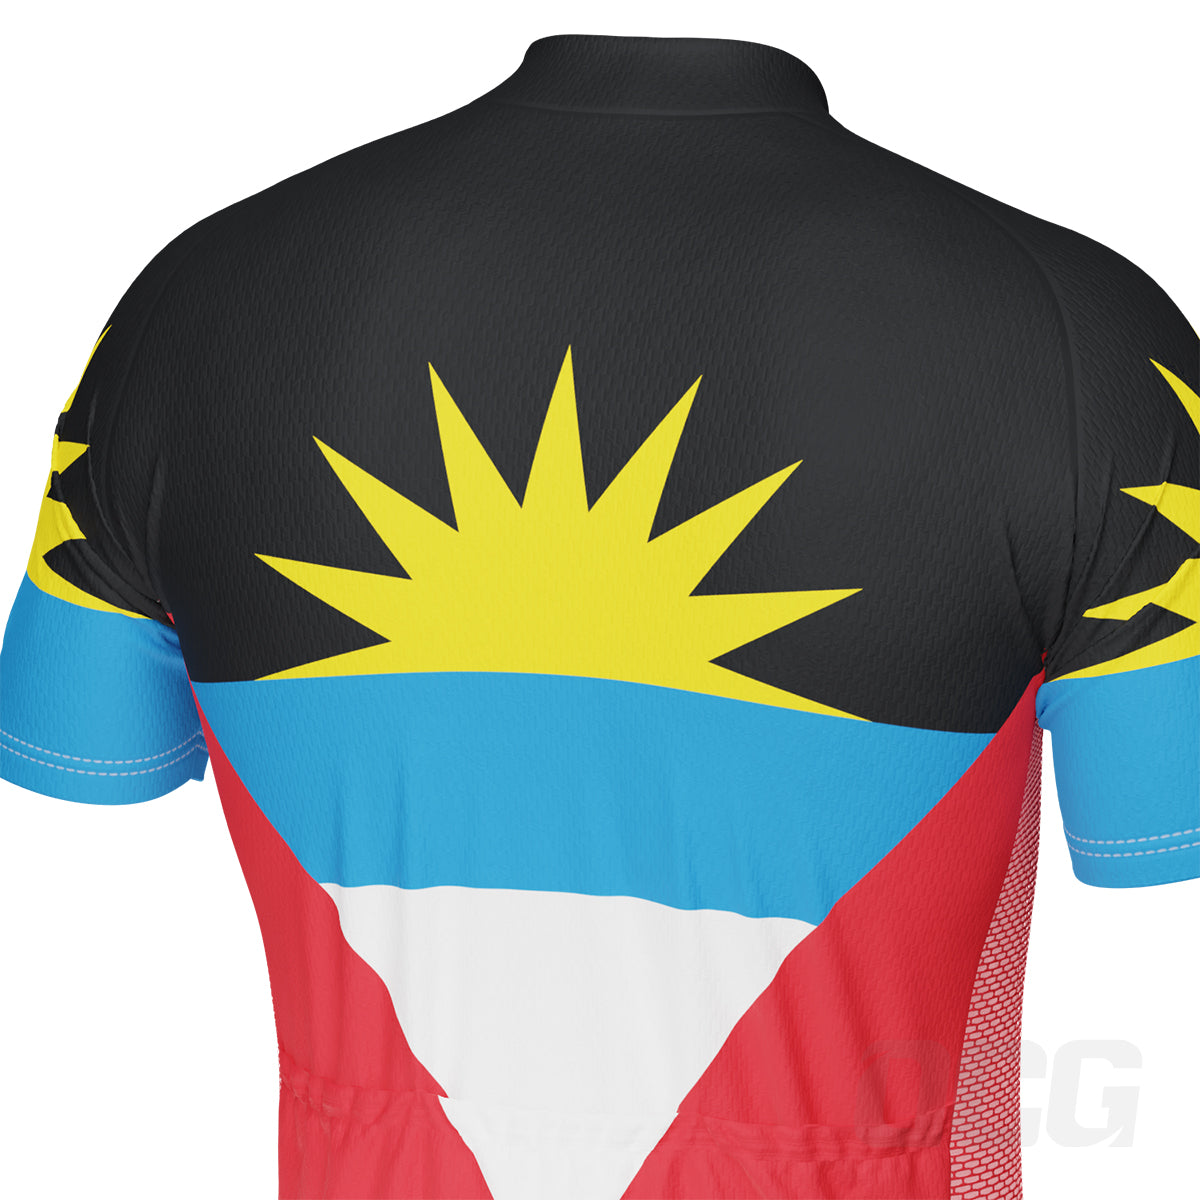 Men's Antigua and Barbuda Short Sleeve Cycling Kit